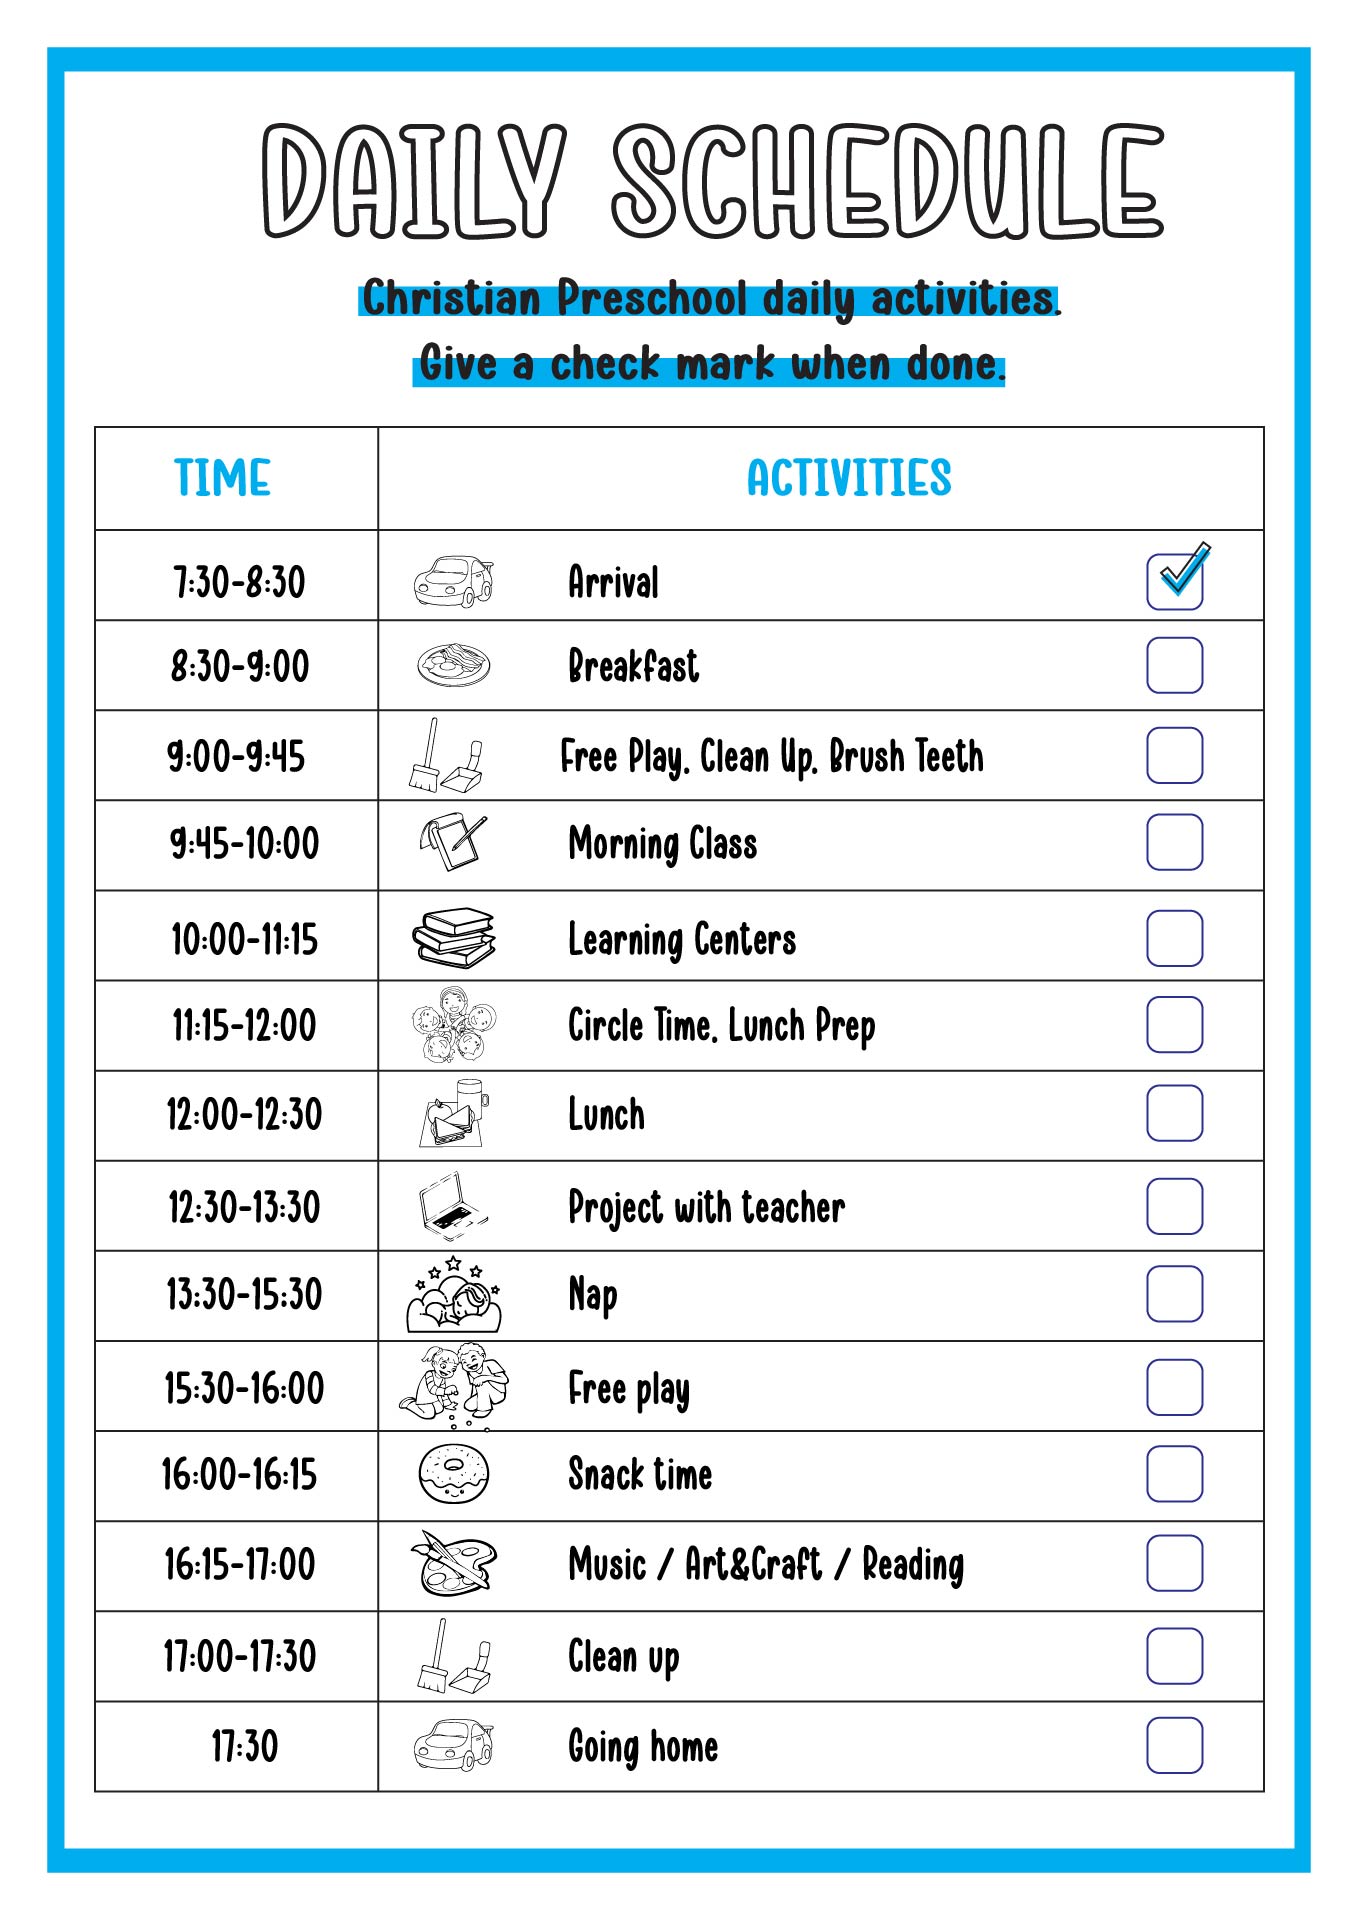 Christian Preschool Daily Schedule Image